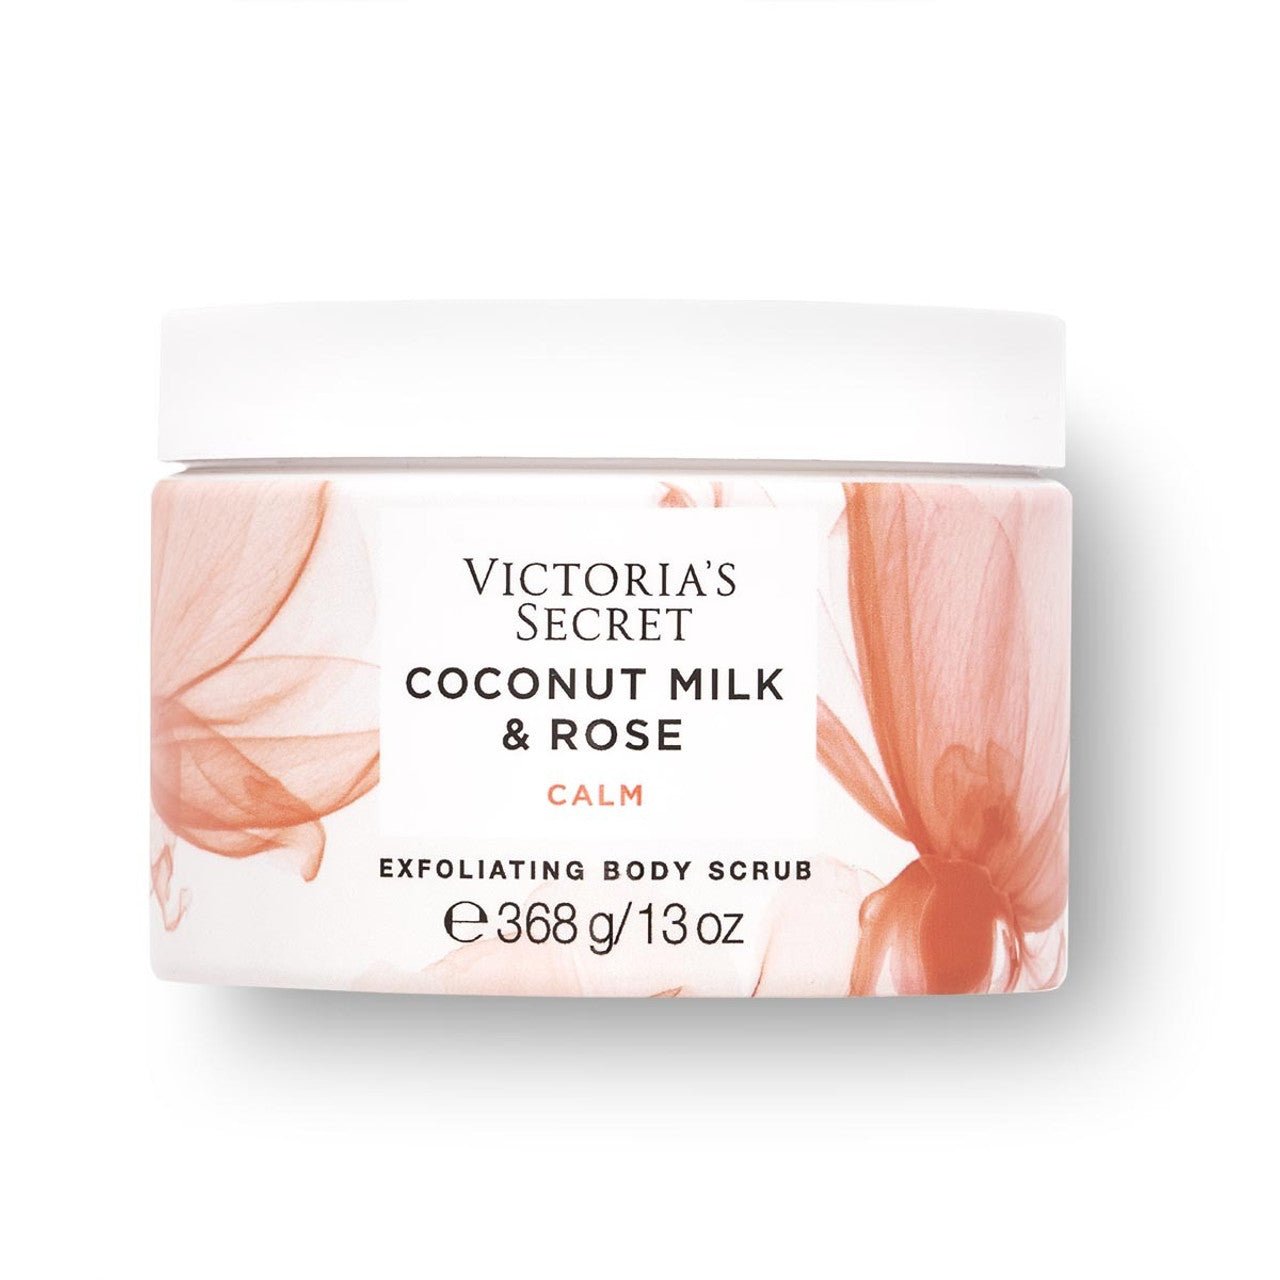 Victoria's Secret Coconut Milk & Rose Calm Body Scrub | My Perfume Shop Australia